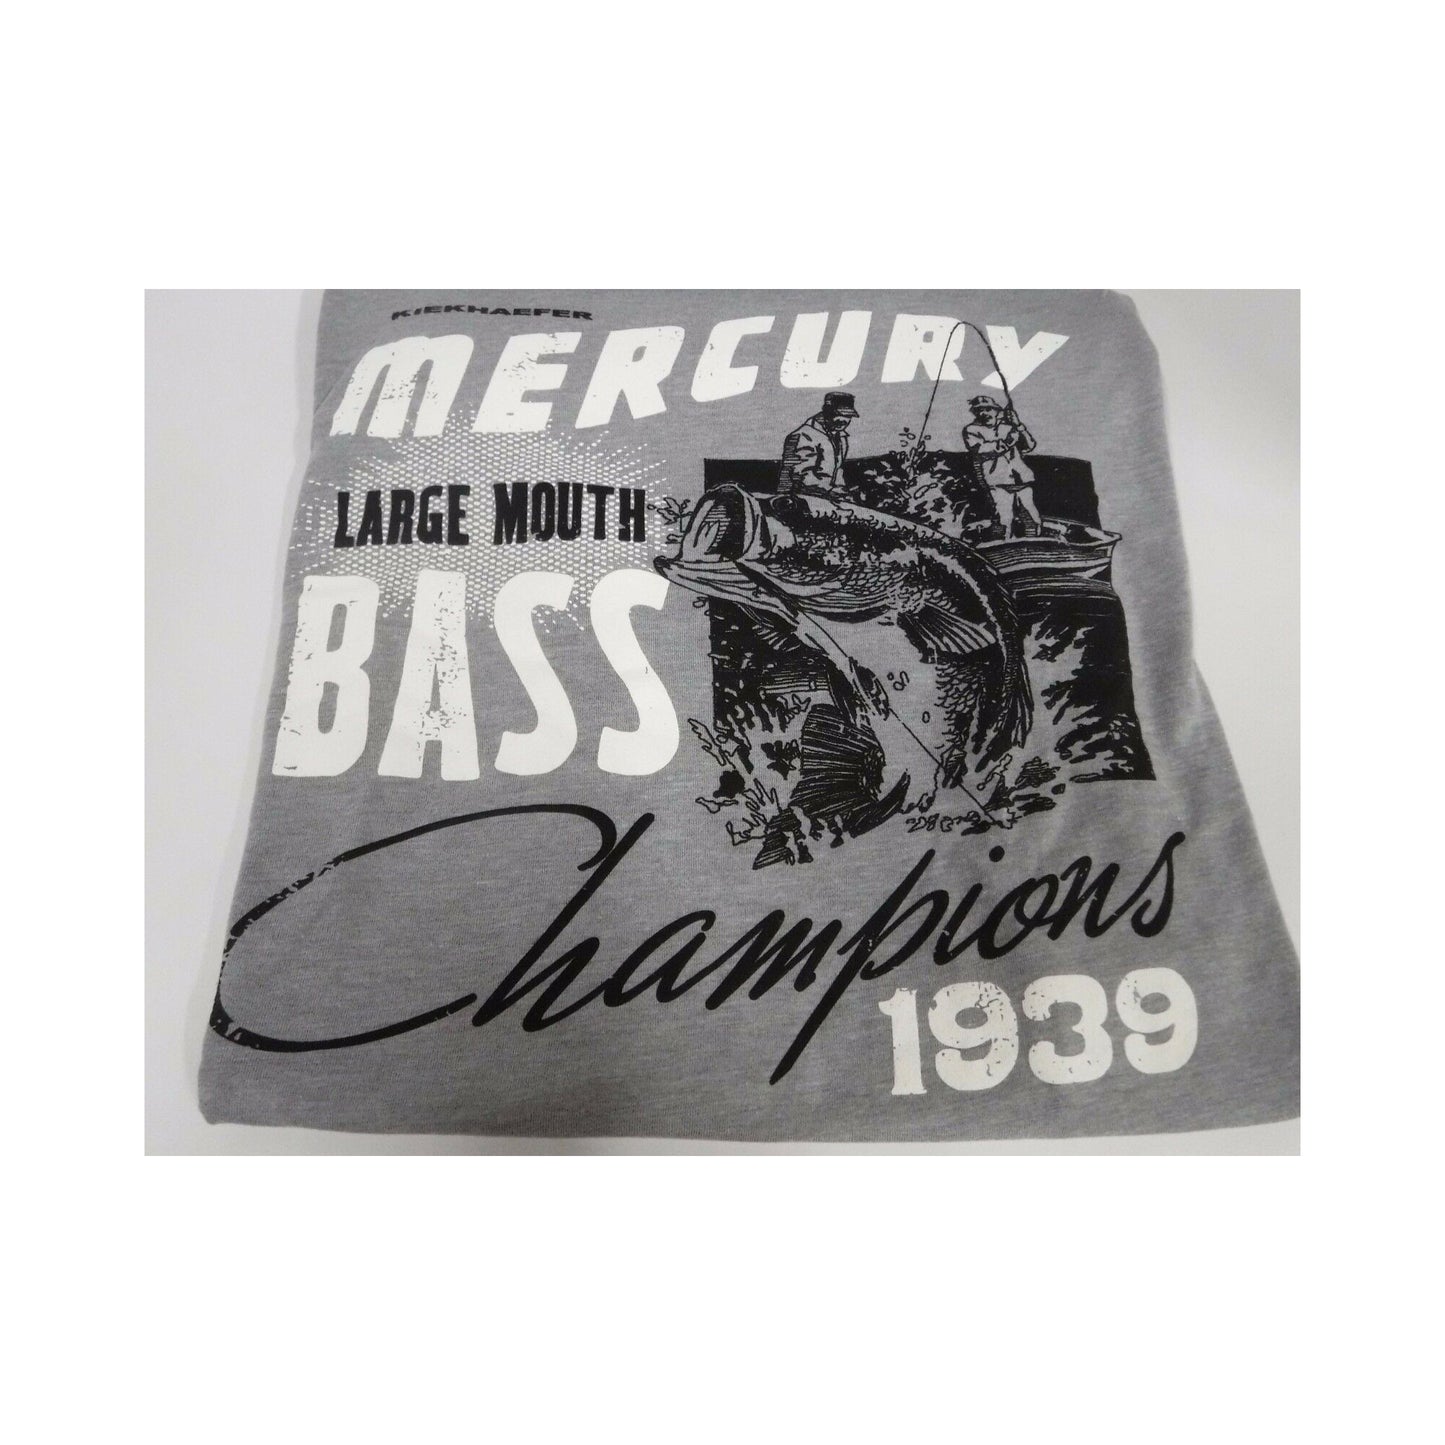 New Authentic Mercury Marine Short Sleeve Shirt Gray w/ Bass Fishing Champions 1939  2XL